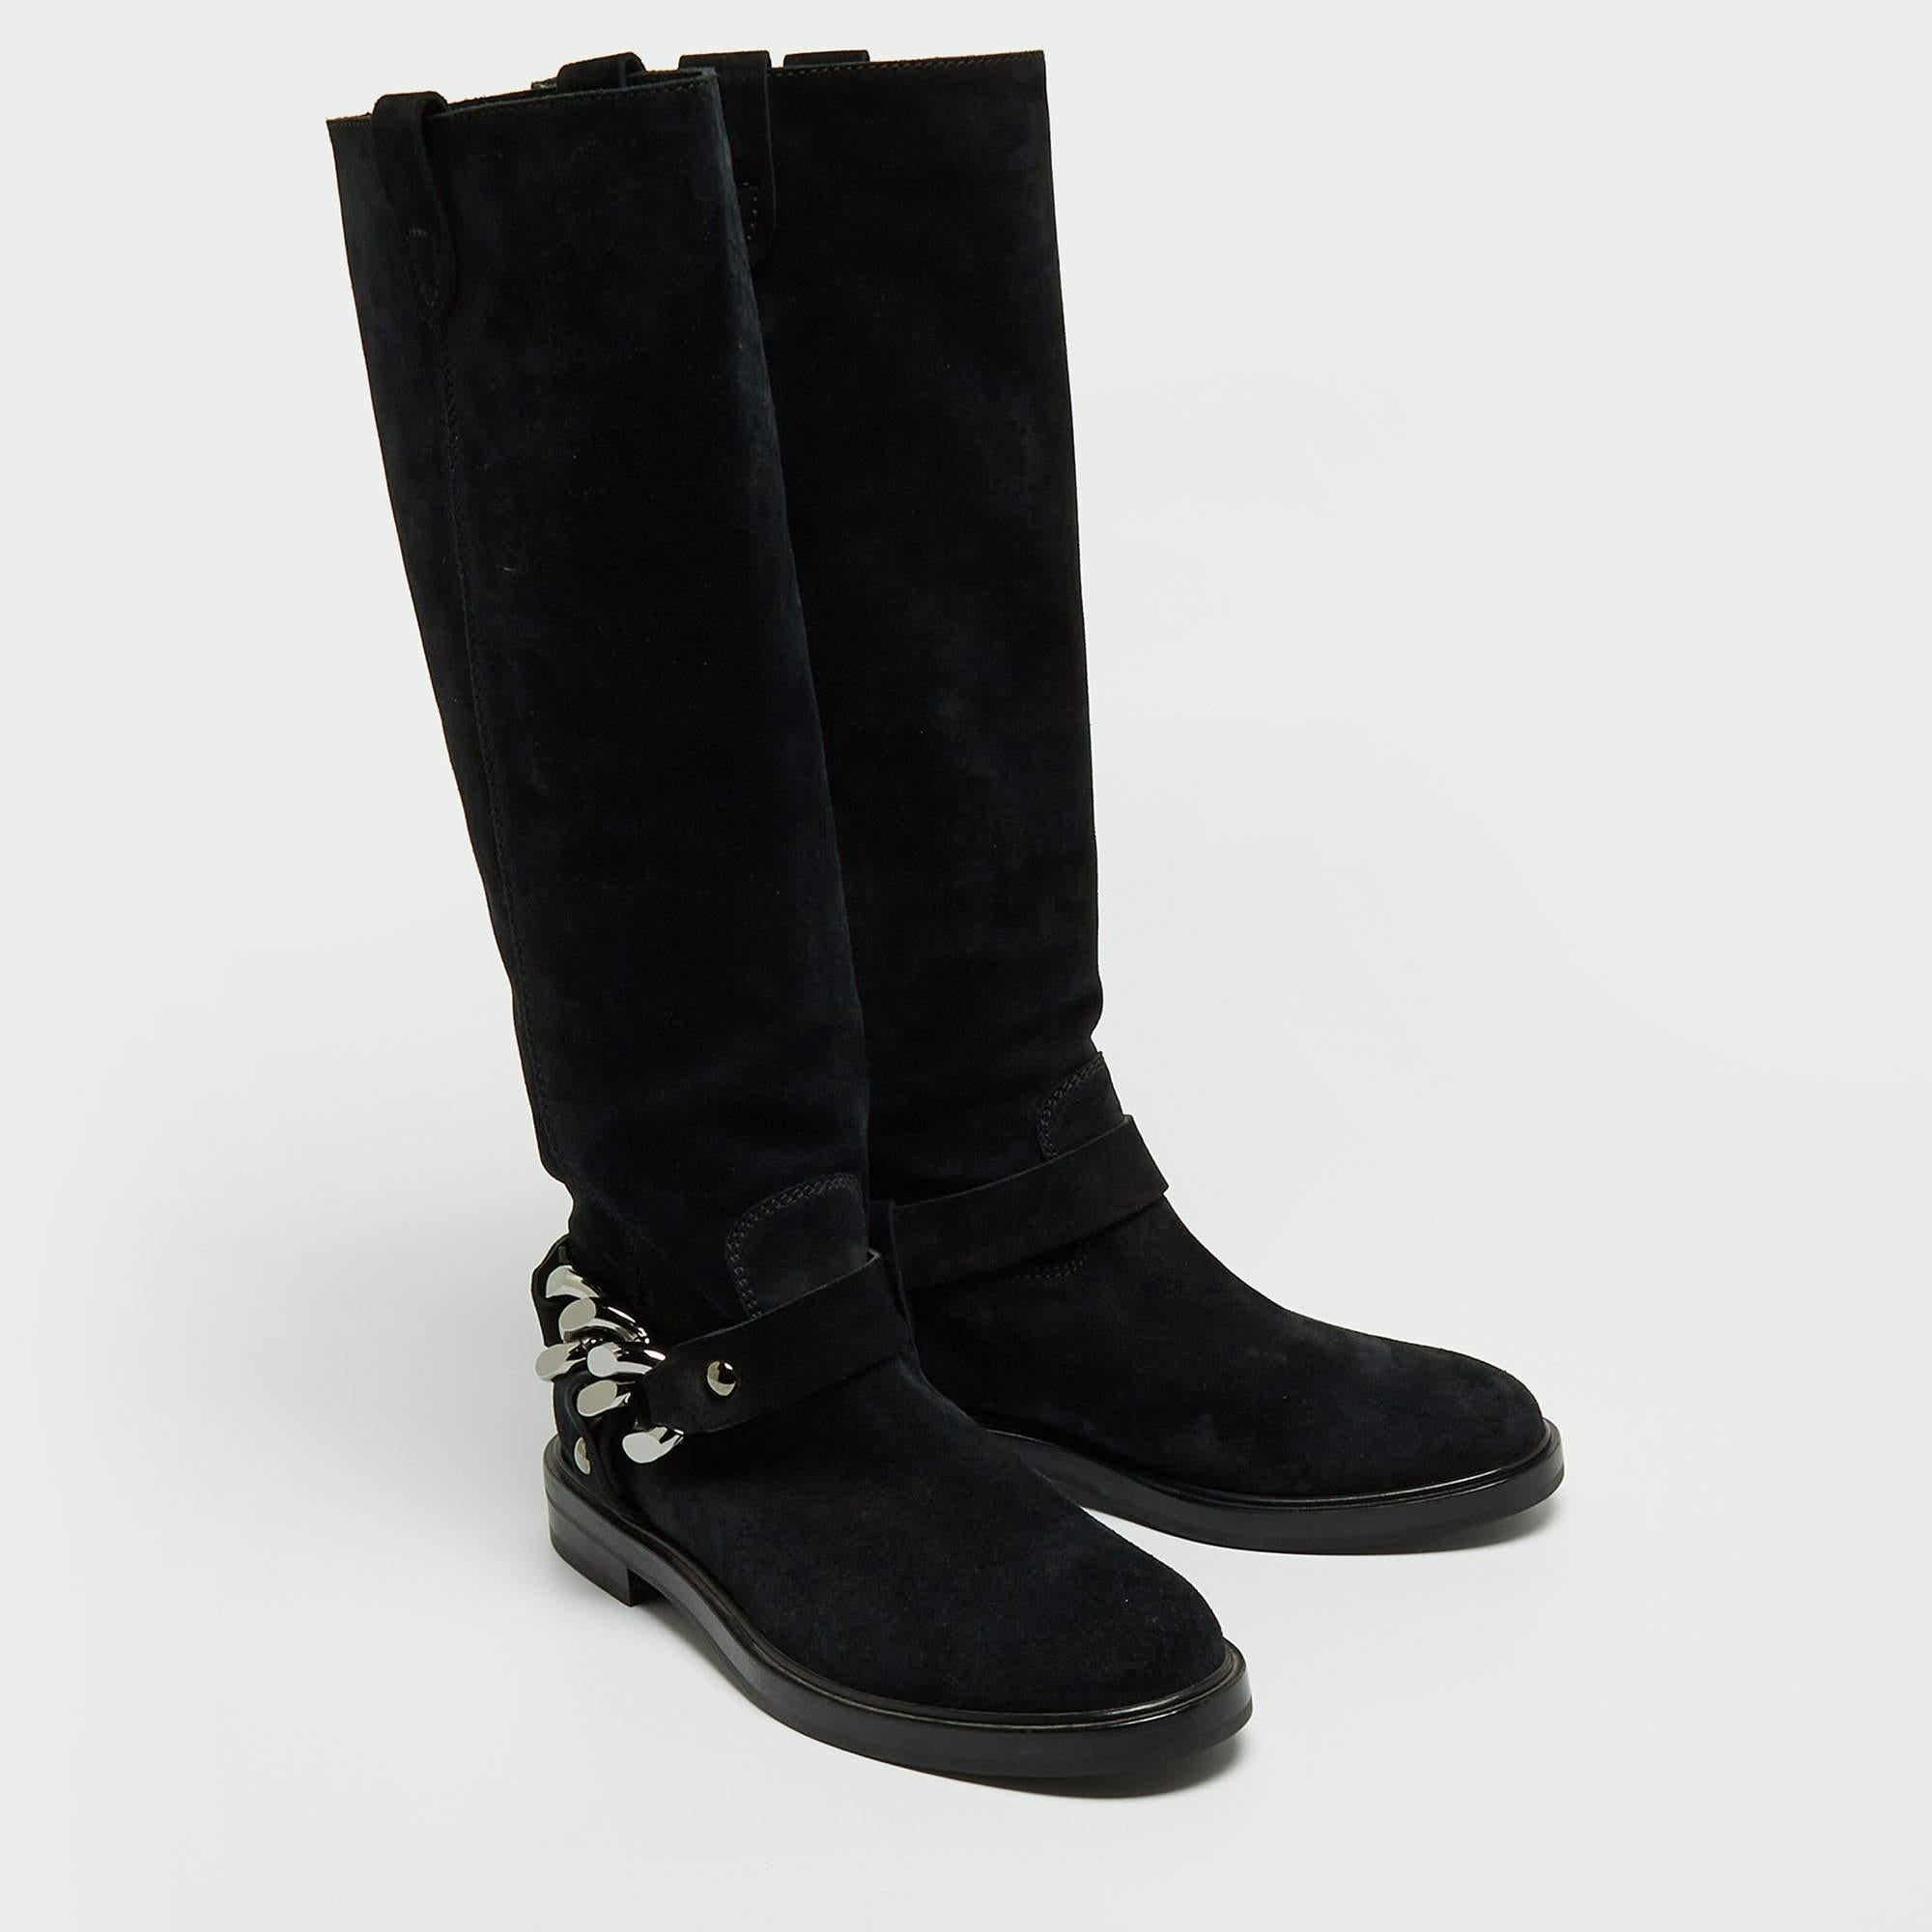 Casadei Black Suede Knee Length Boots Size 38.5 In Excellent Condition For Sale In Dubai, Al Qouz 2